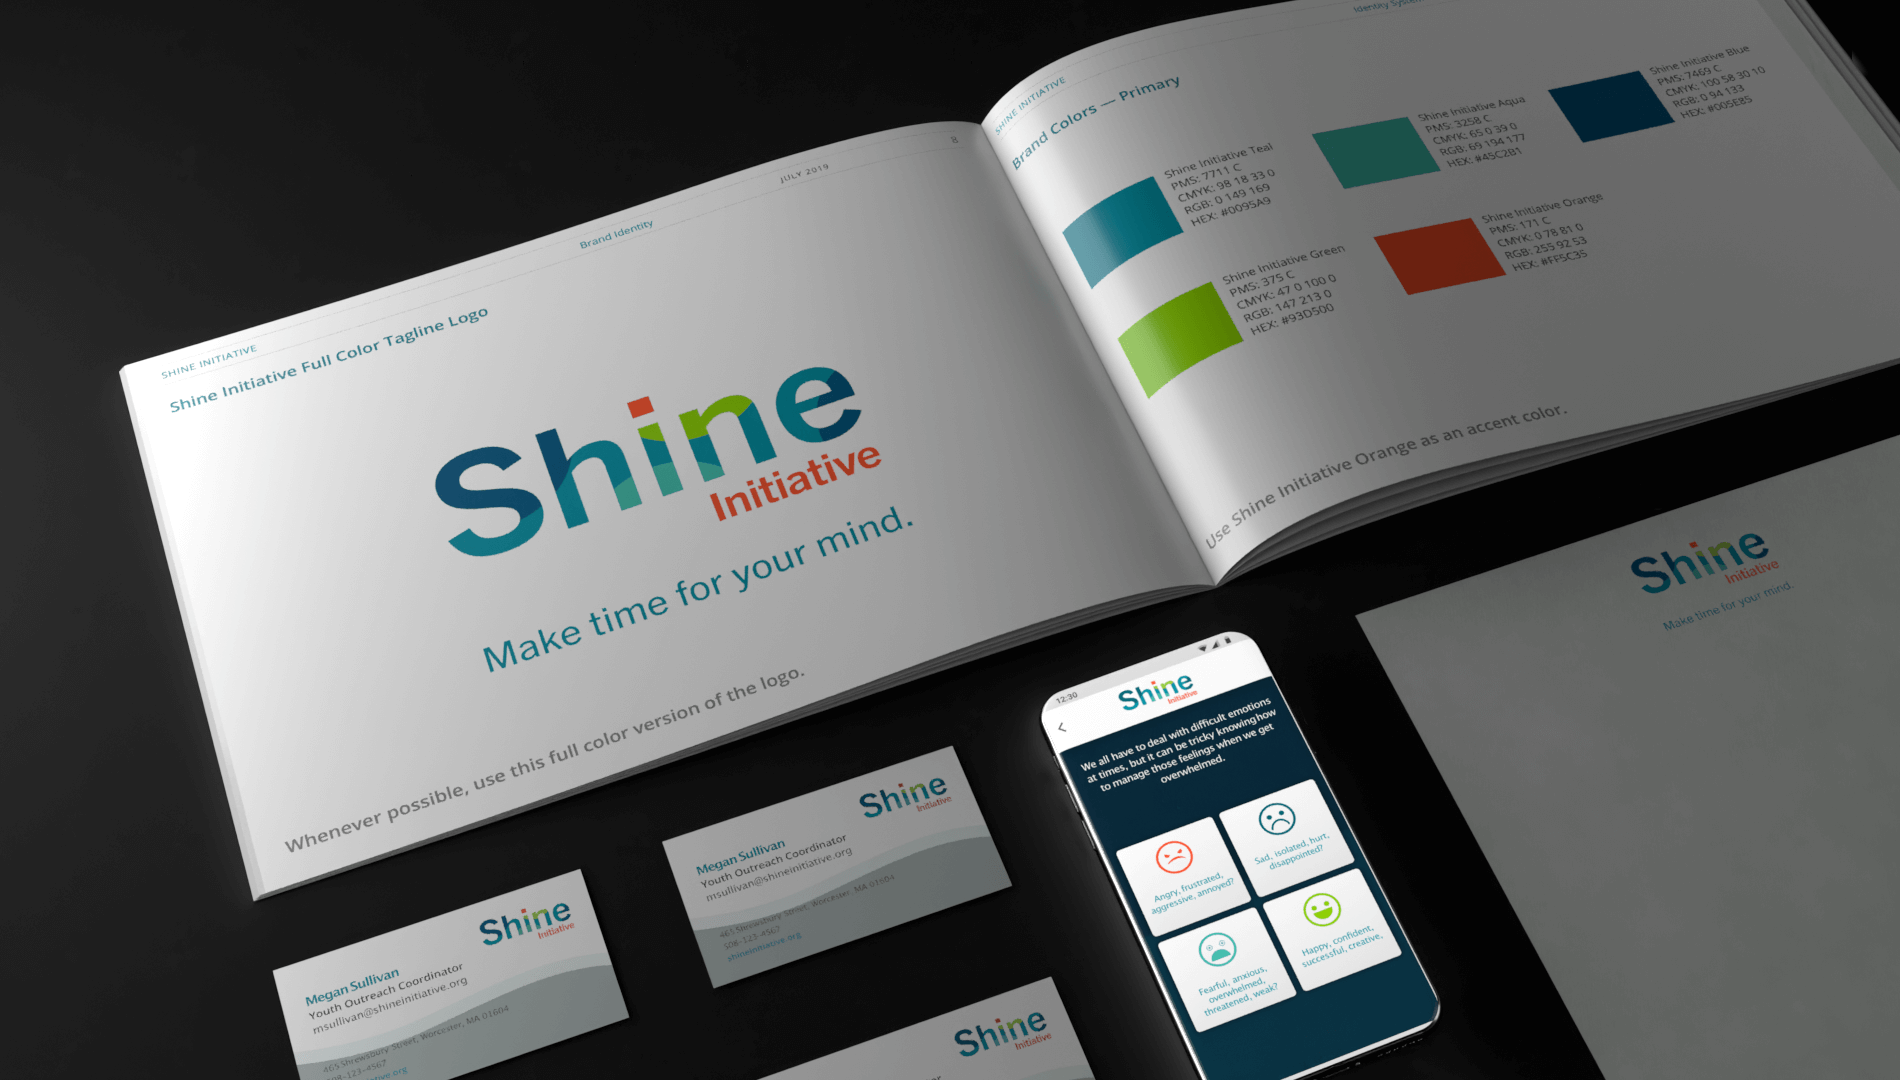 Shine Initiative Featured Image 1